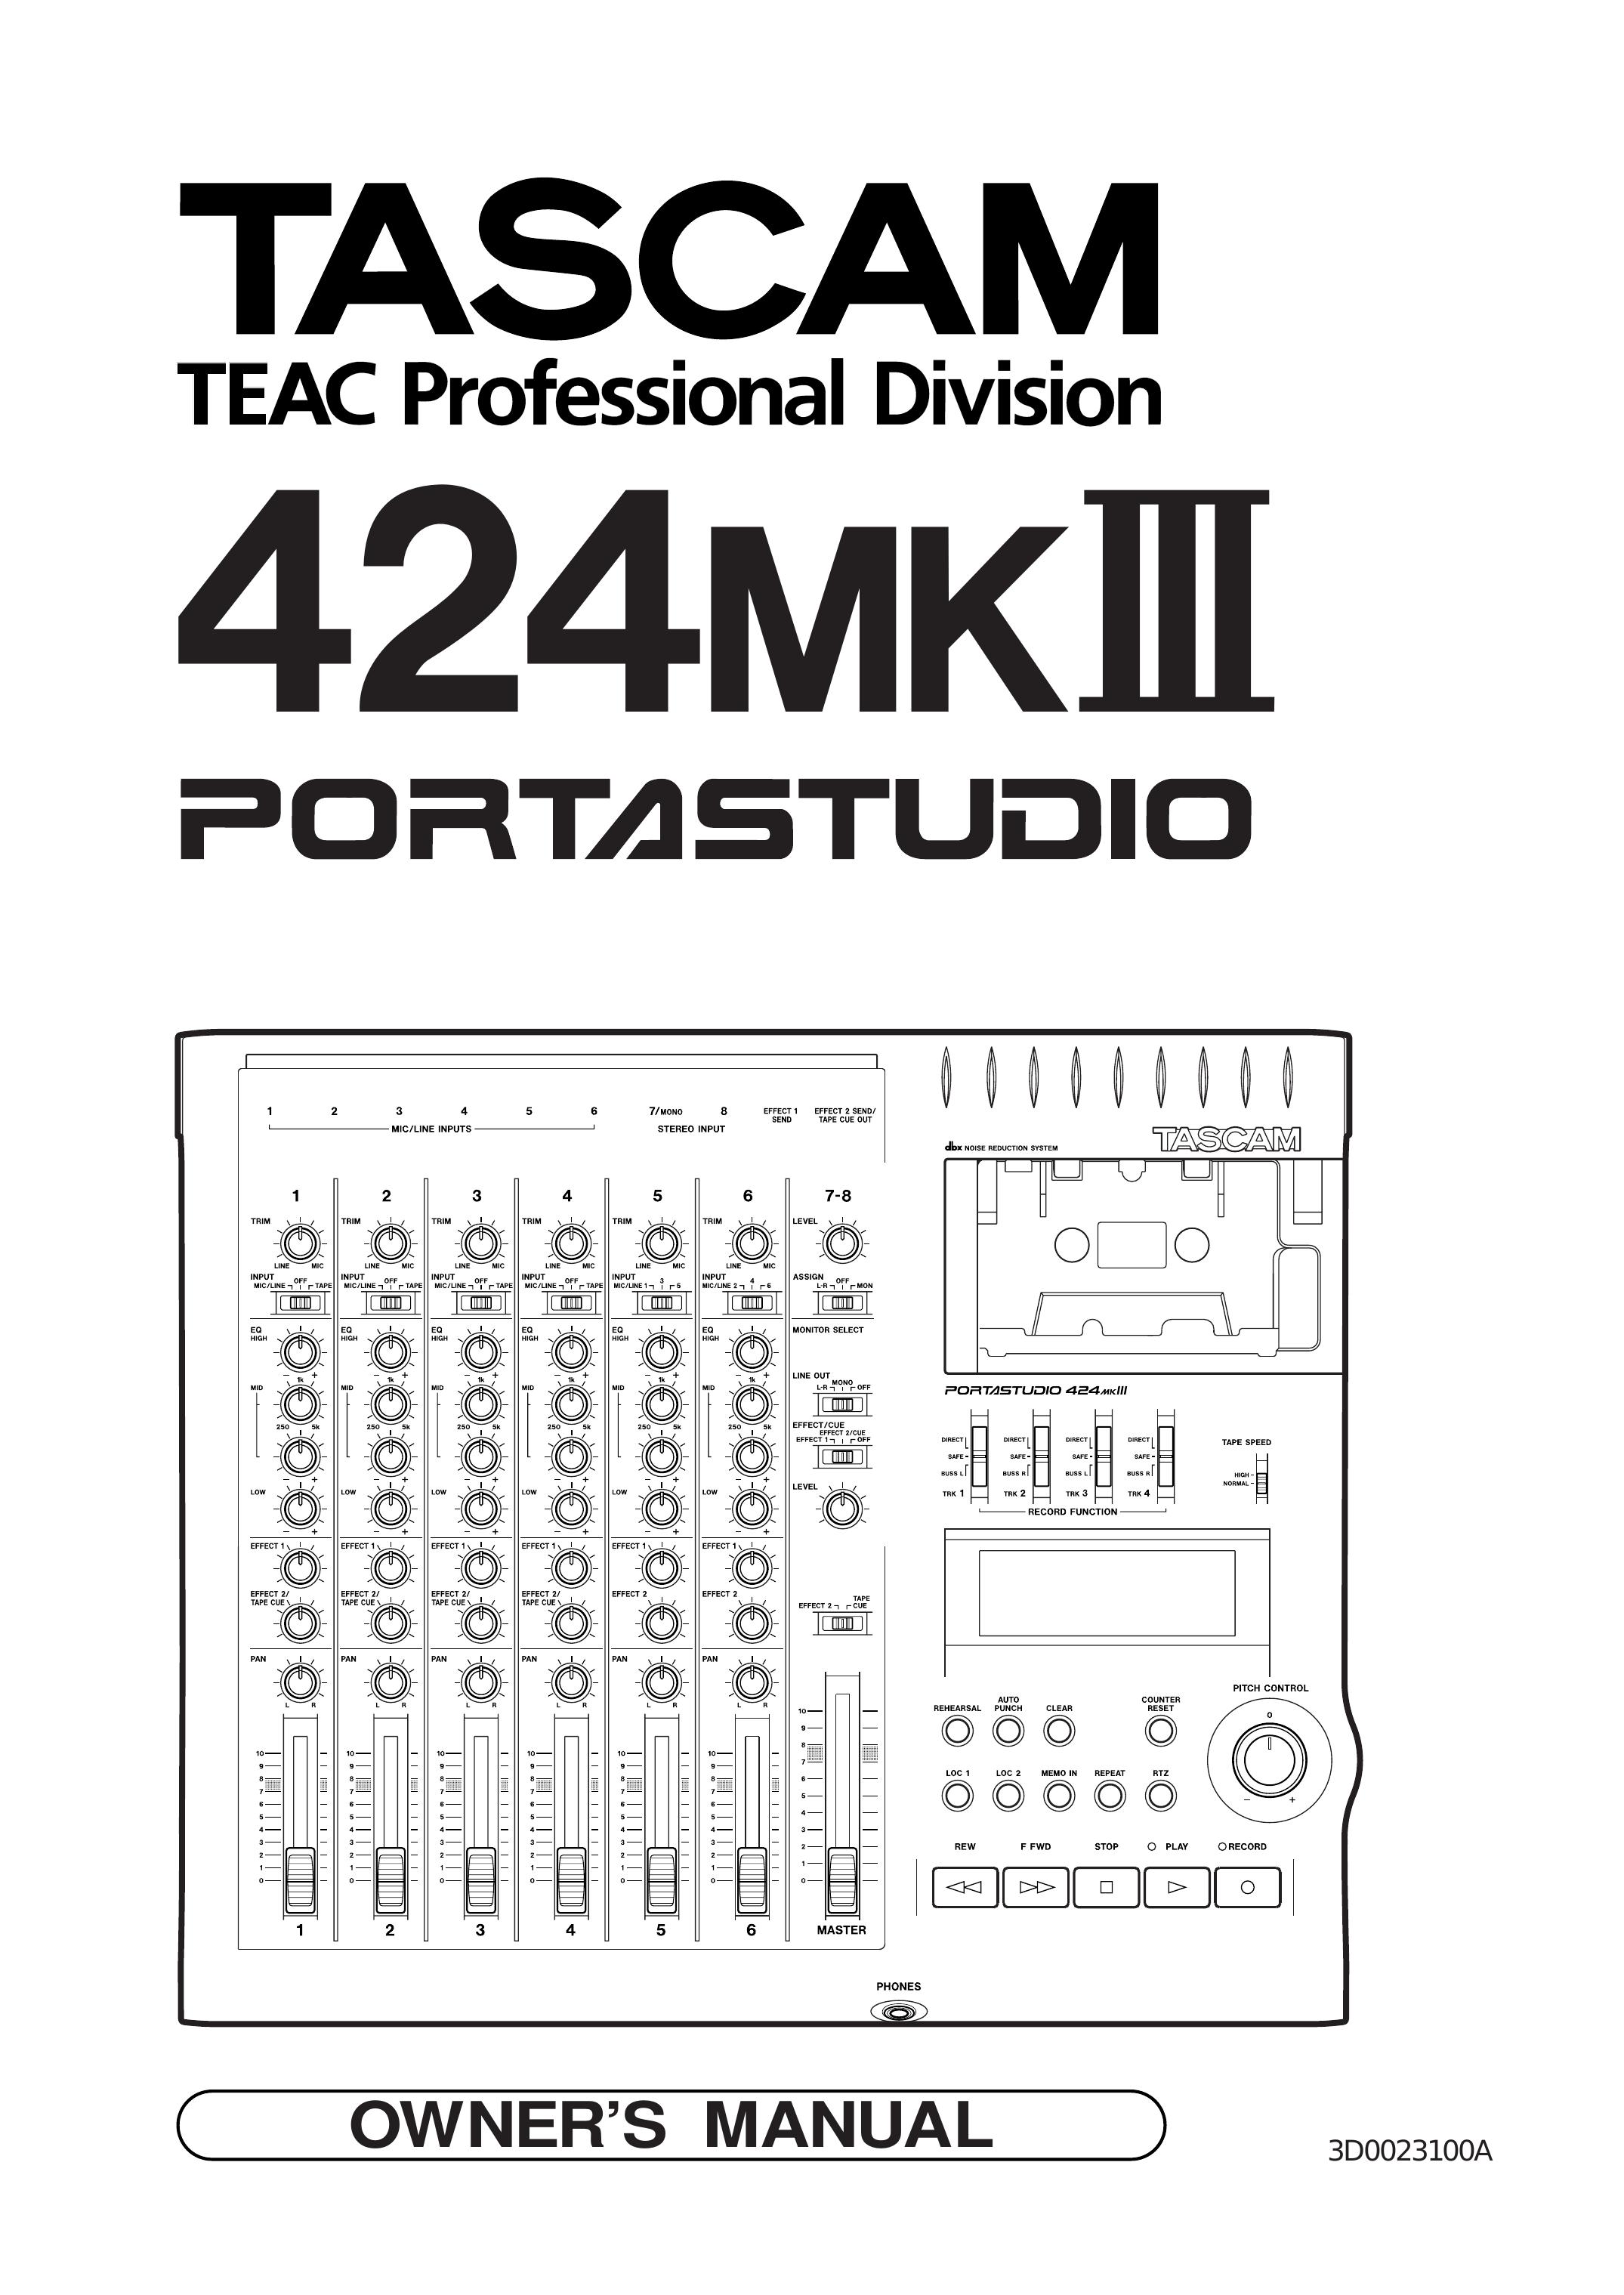 Tascam 424MKIII Recording Equipment User Manual